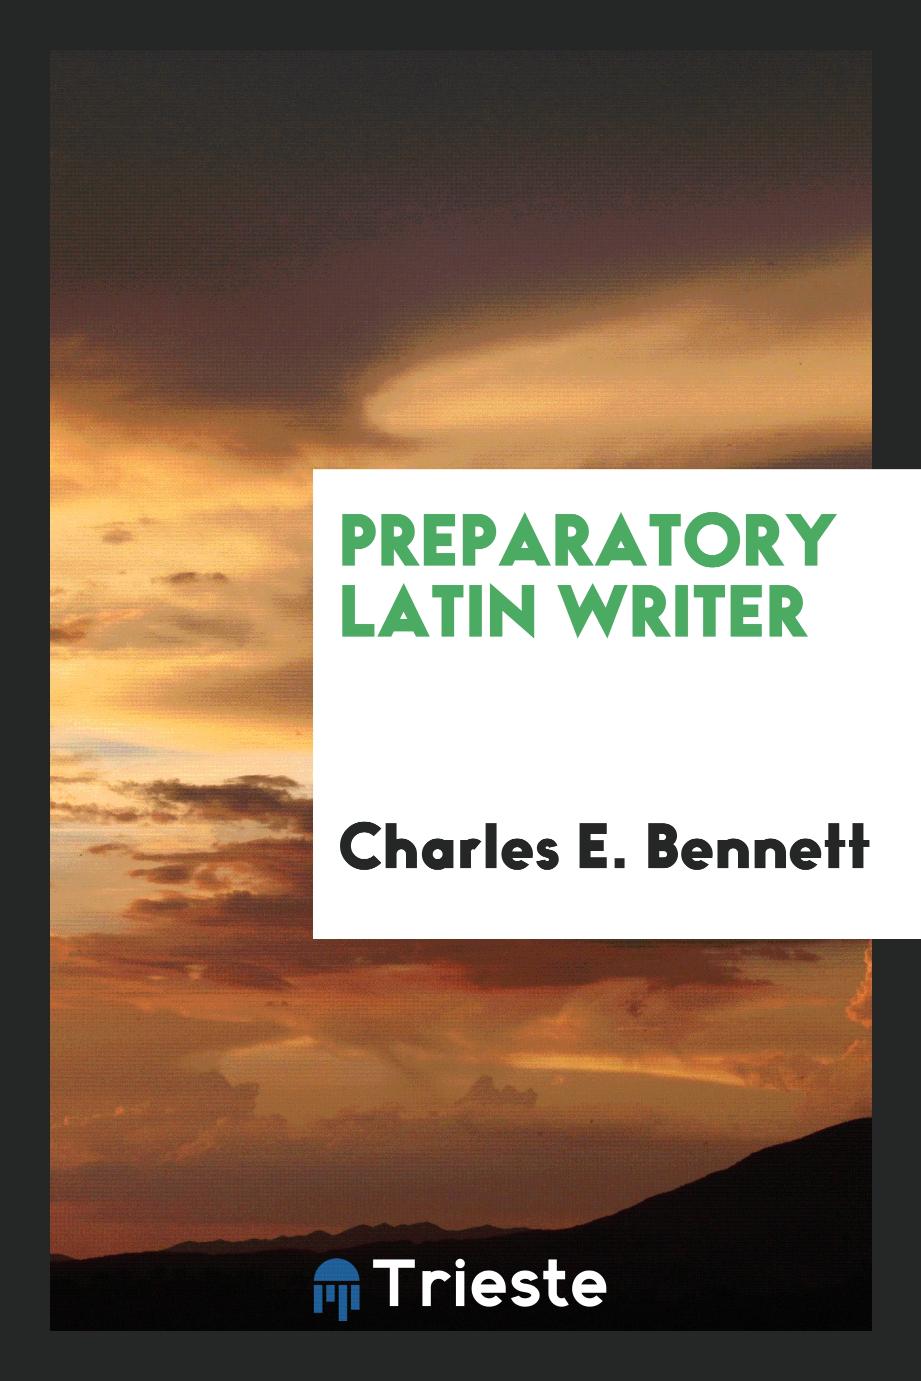 Preparatory Latin writer